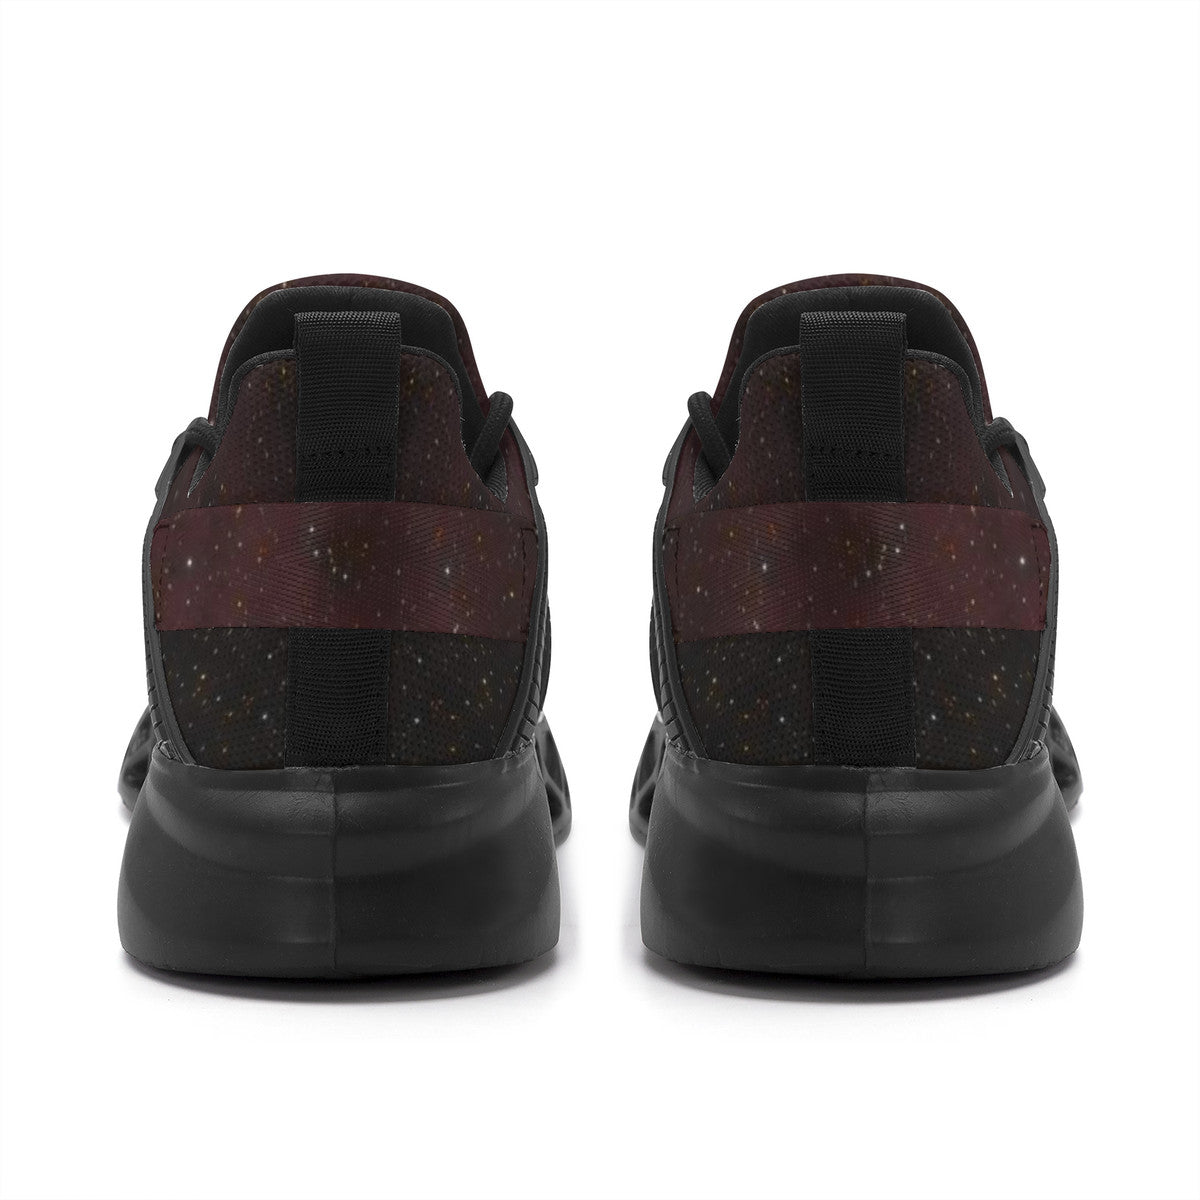 The Nebula Palace - Stellar Comfort: Red Nebula Unisex Elastic Sport Shoes The Nebula Palace: Spiritually Cosmic Fashion